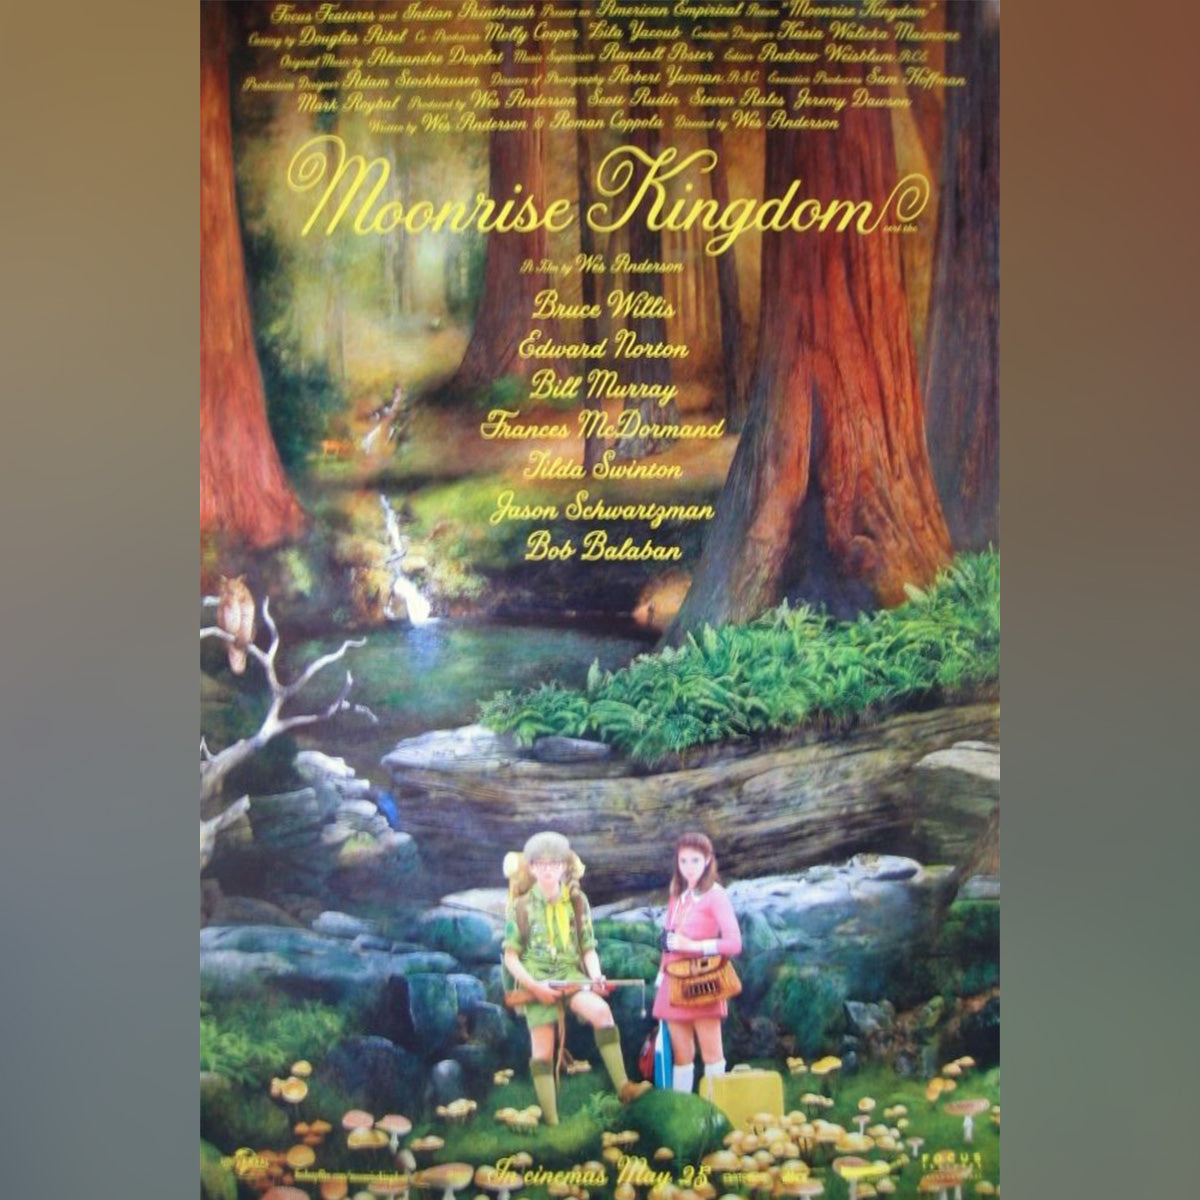 Original Movie Poster of Moonrise Kingdom (2010)